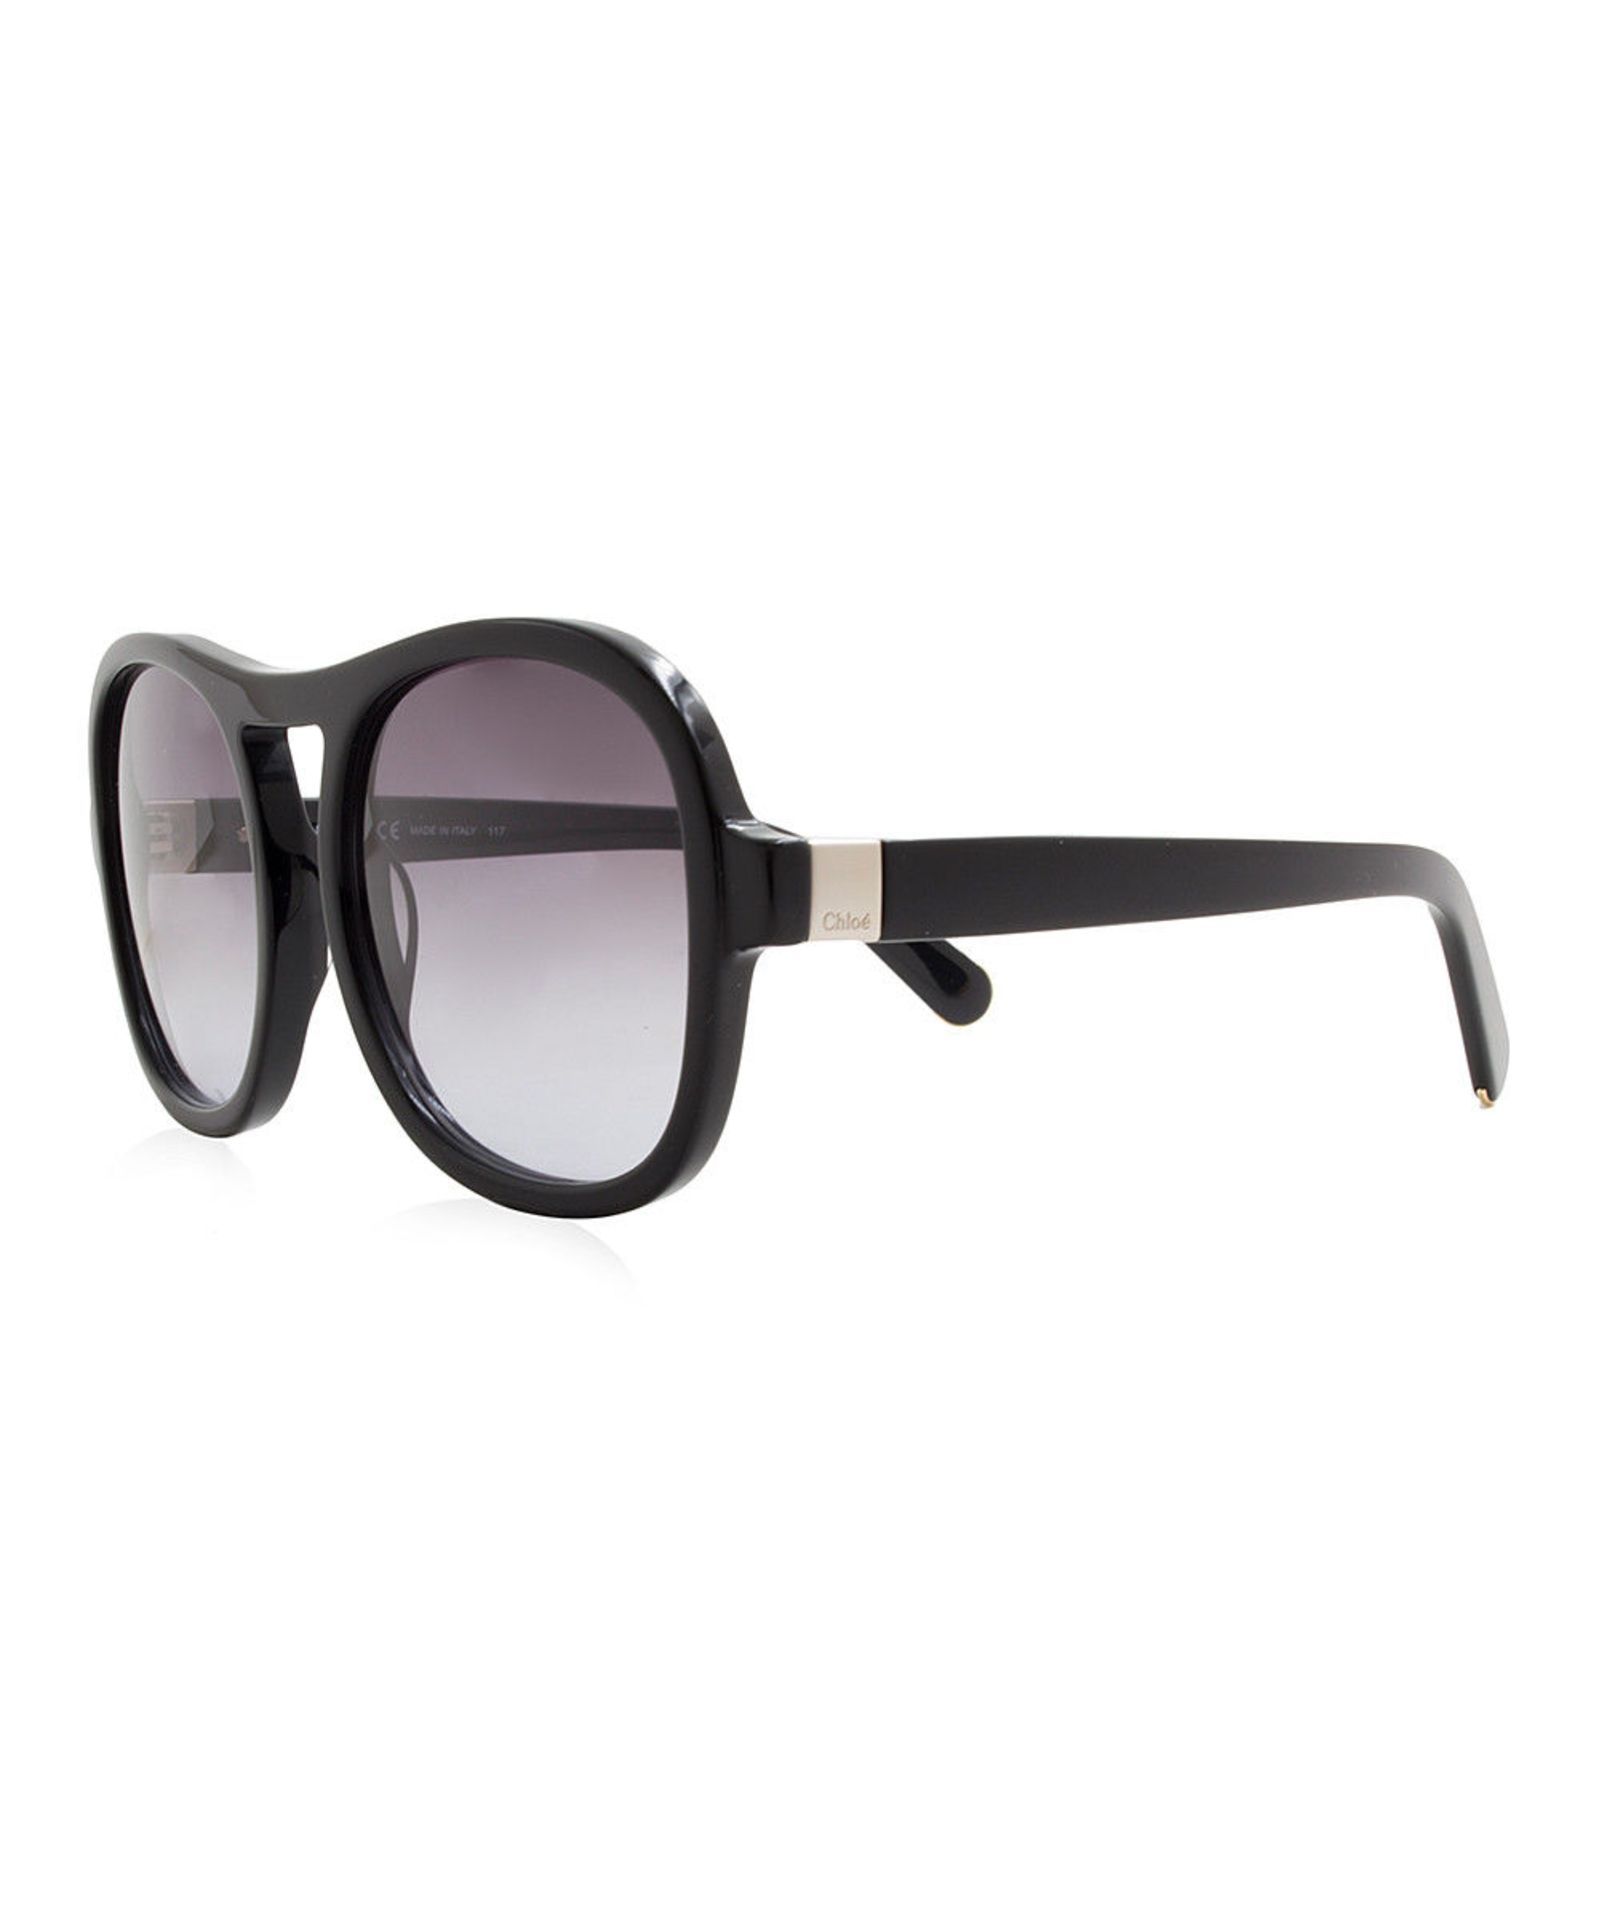 Chloè Black & Gray Gradient Modified Aviator Sunglasses (New With Tags) [Ref: 56635633-Mi-Tub 7-Mi]